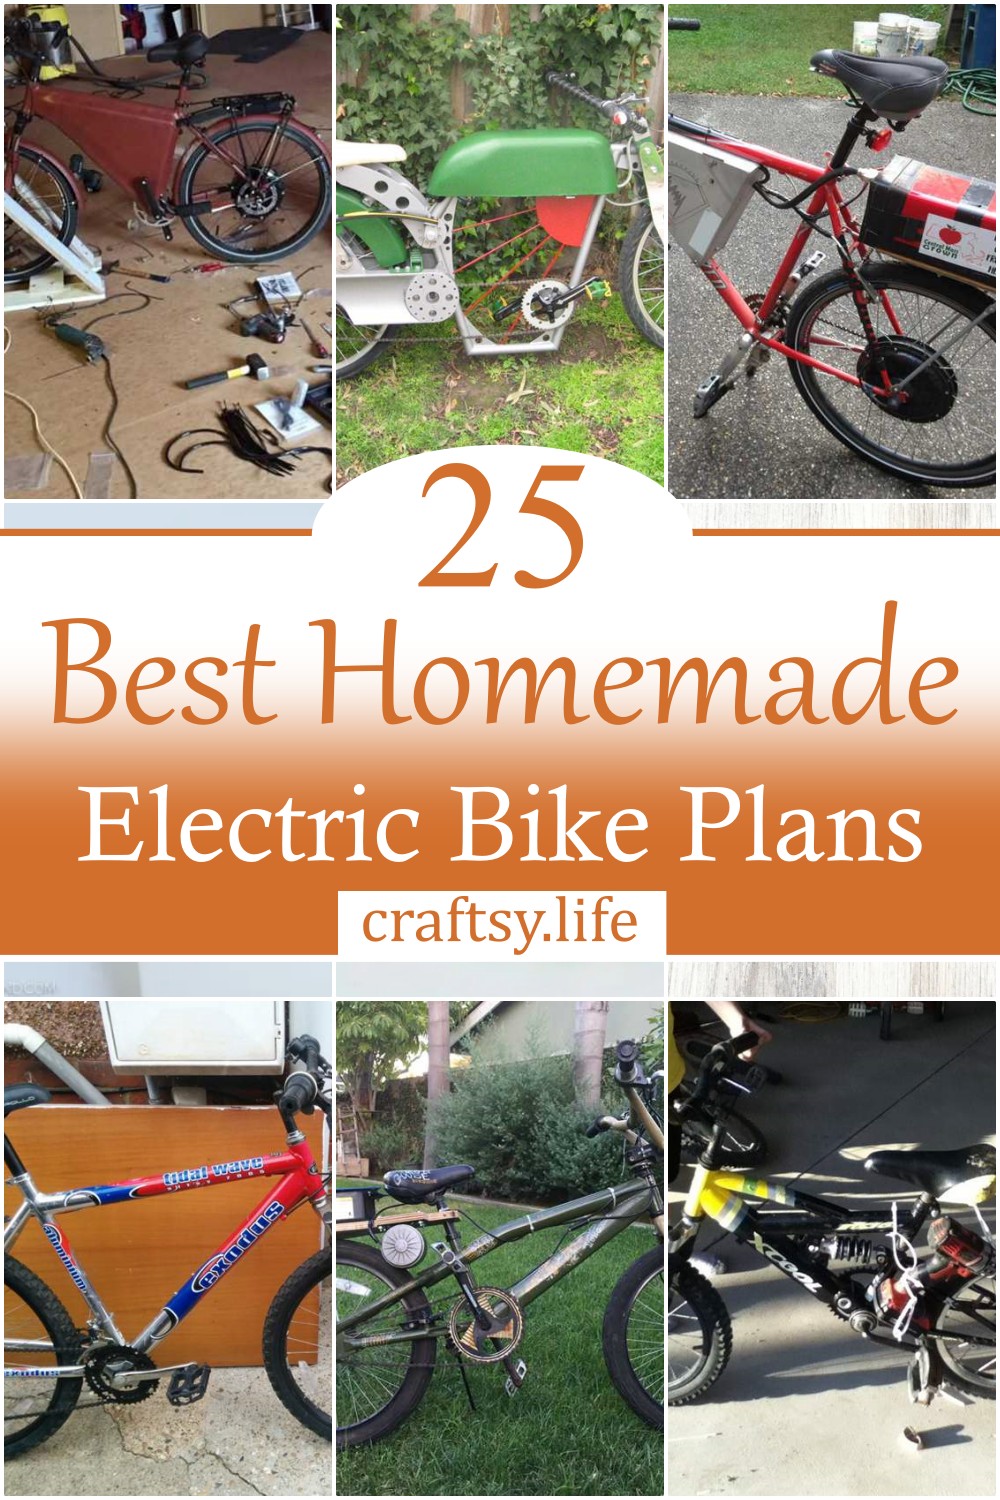 Best Homemade Electric Bike Plans